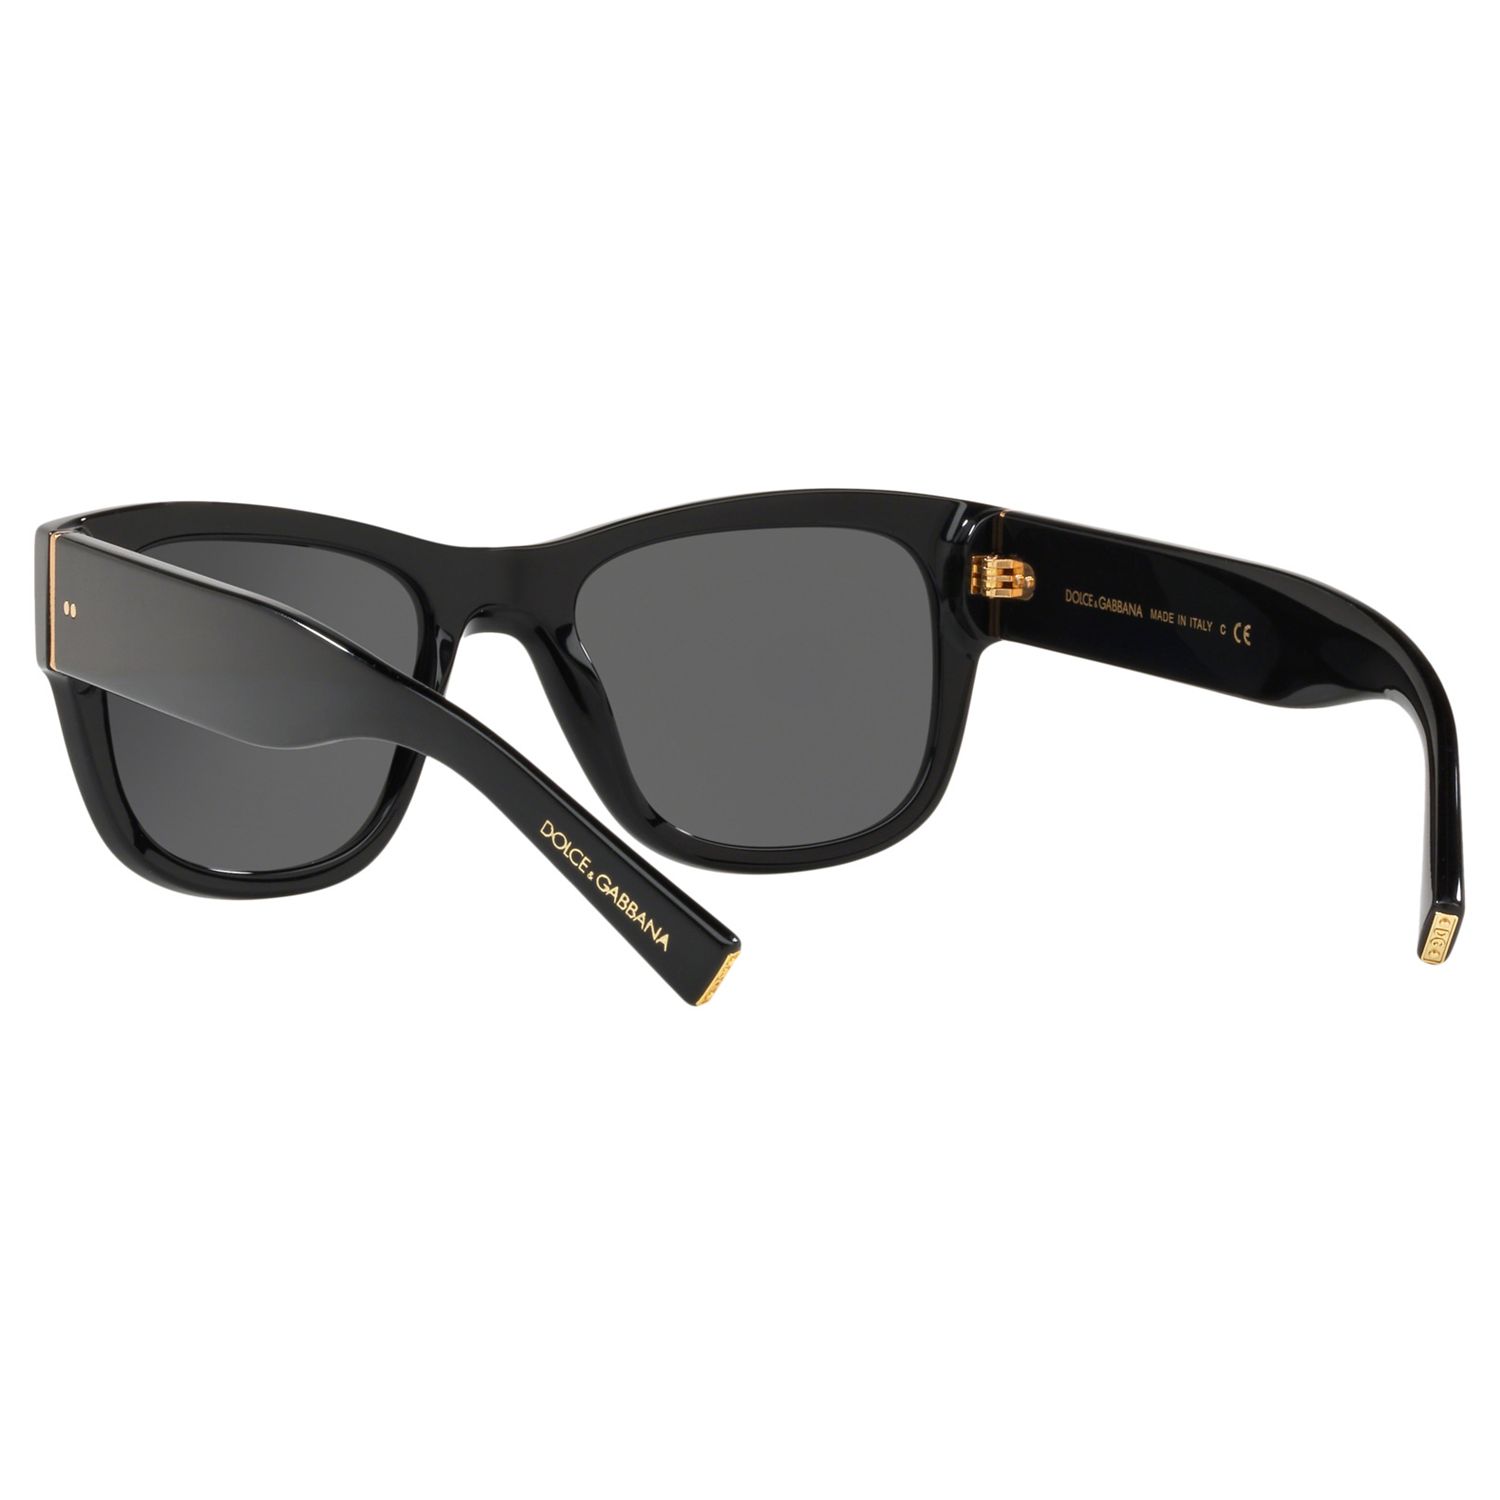 Buy Dolce & Gabbana DG4338 Men's Square Frame Sunglasses, Black/Grey Online at johnlewis.com